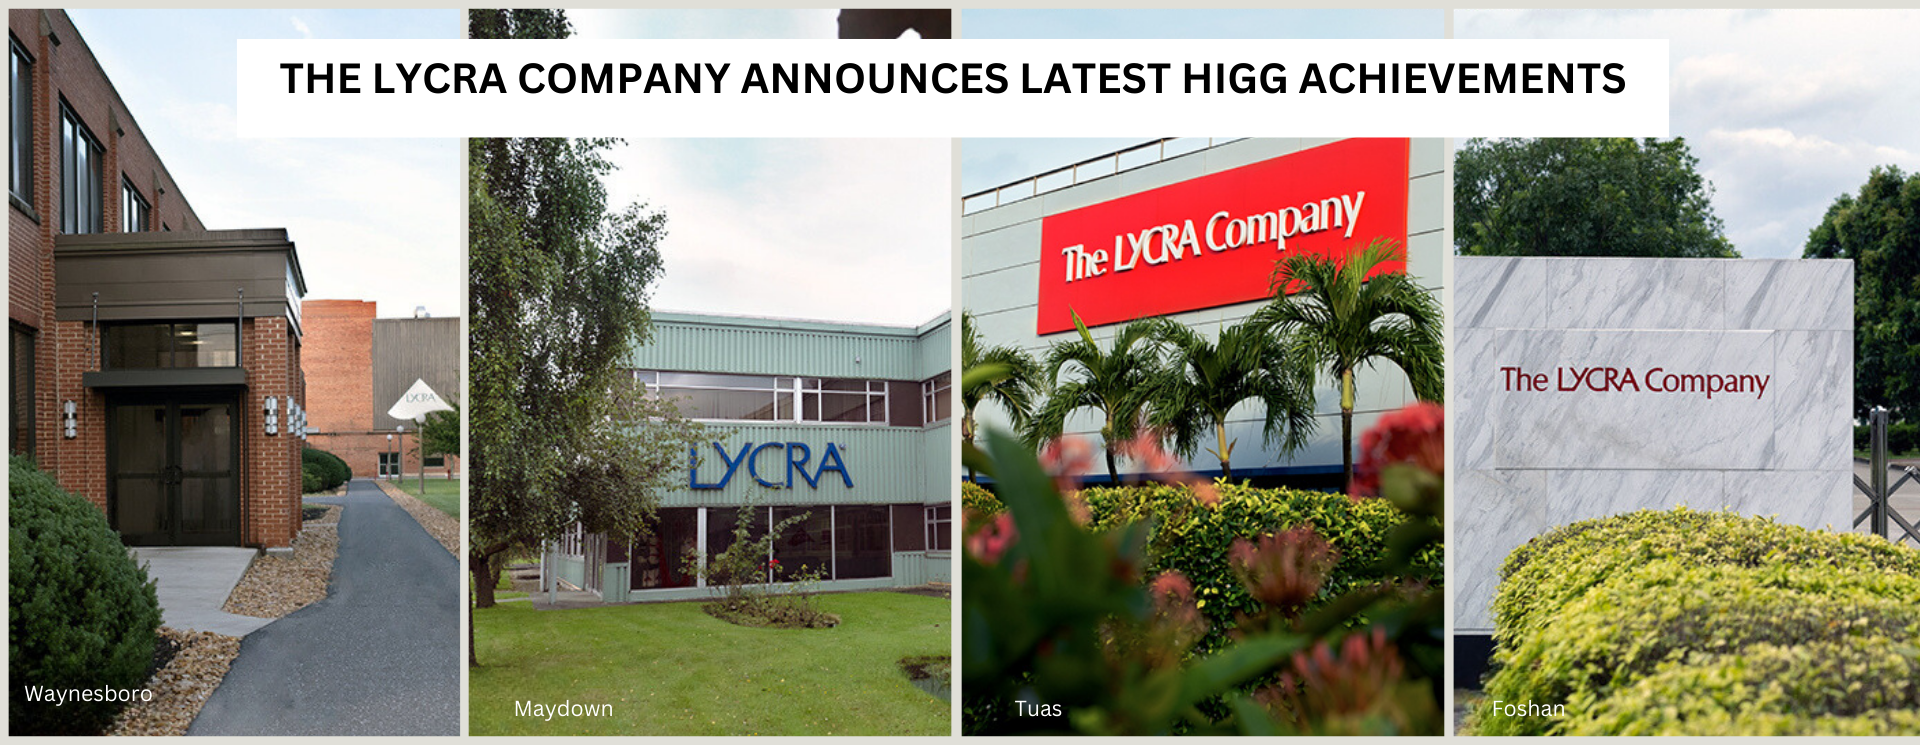  The LYCRA Company announces latest higg achievements